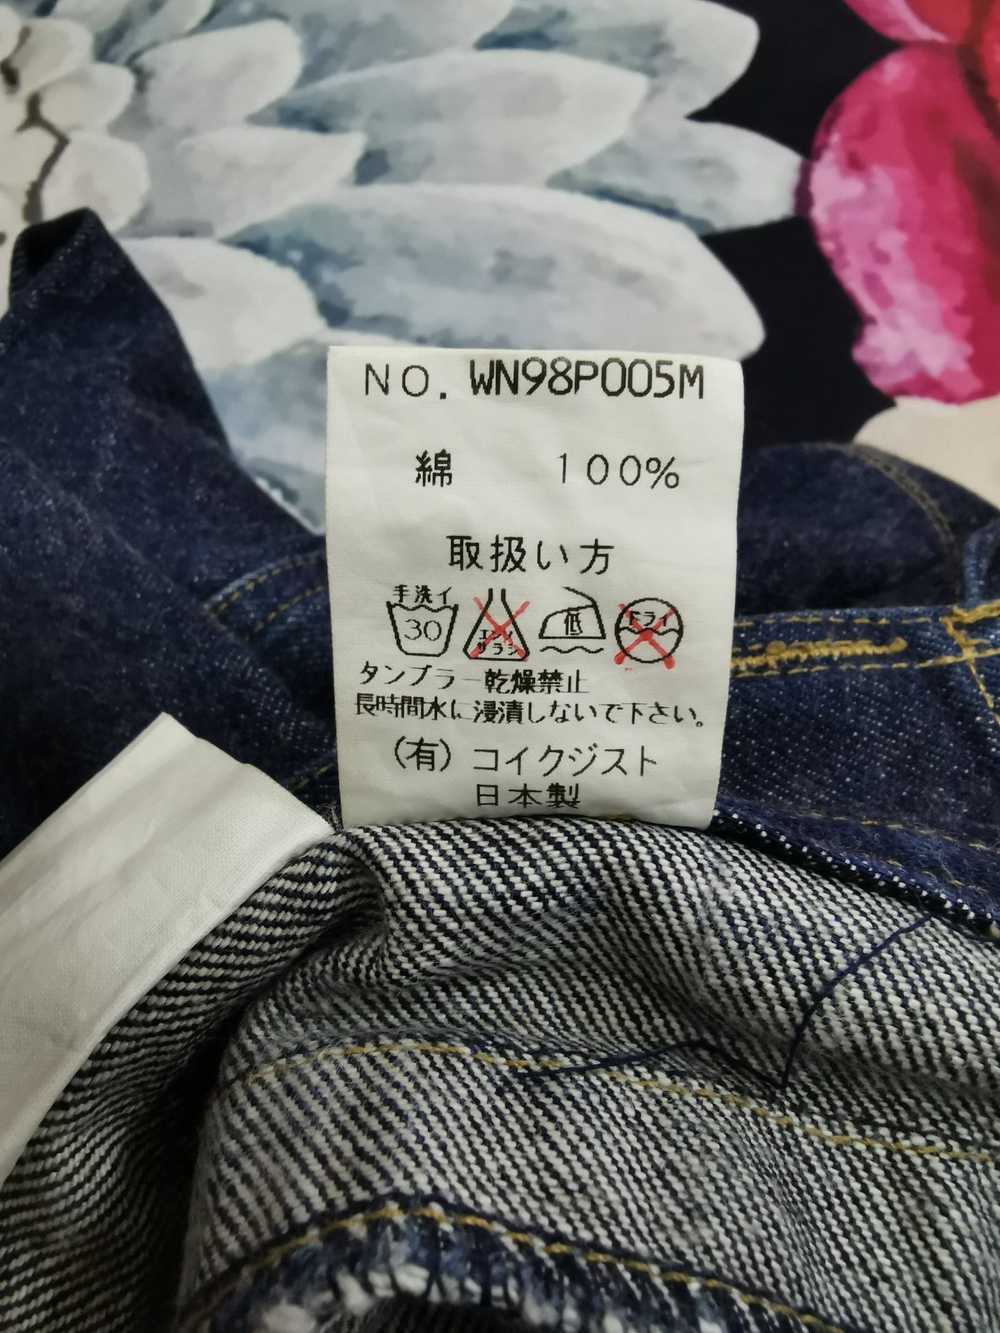 Japanese Brand Japanese Brand x WRONG - image 5